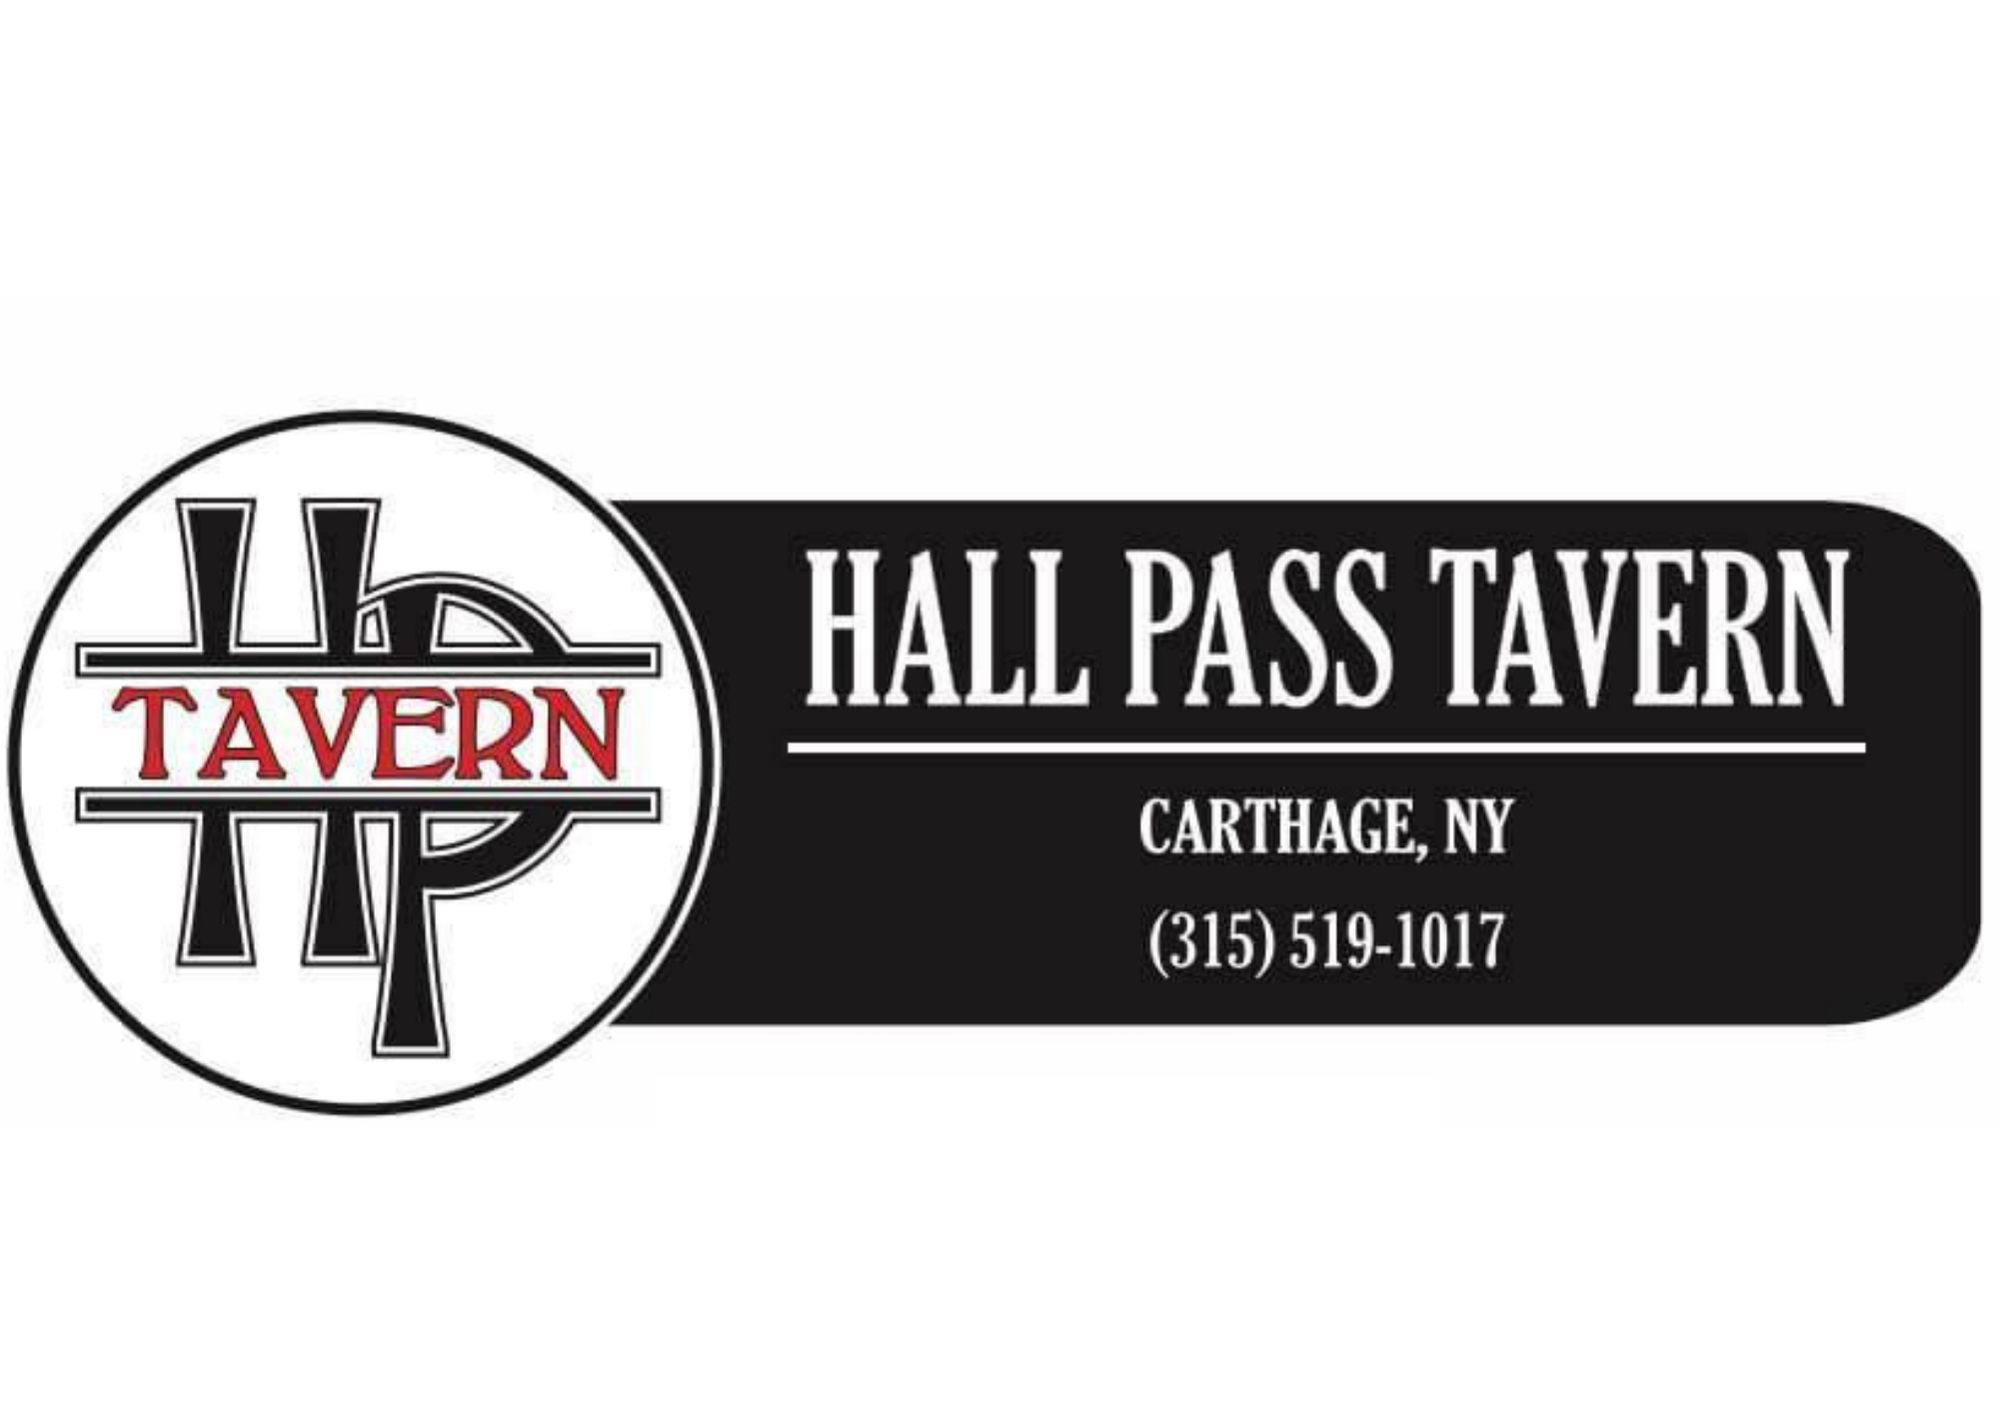 Hall Pass Tavern